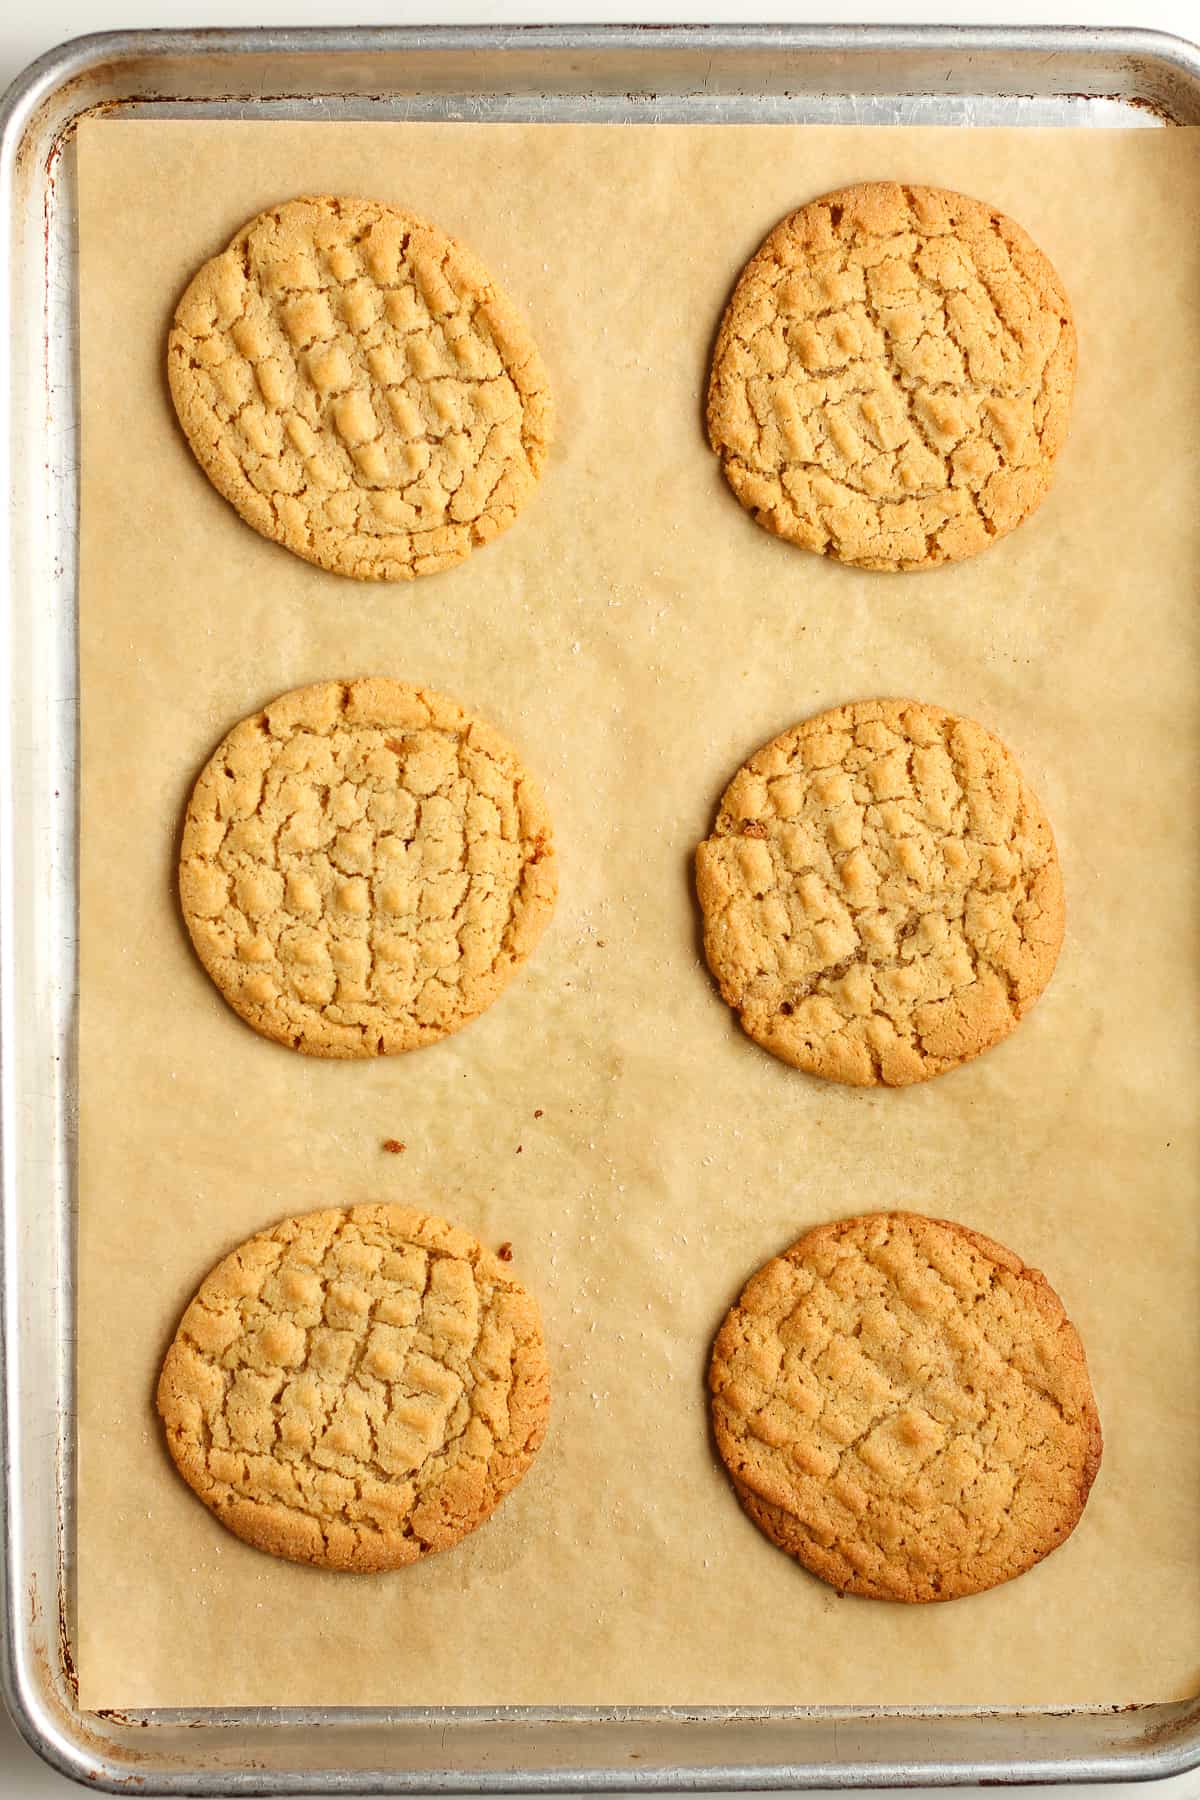 A baking sheet of just baked peanut butter cookies.